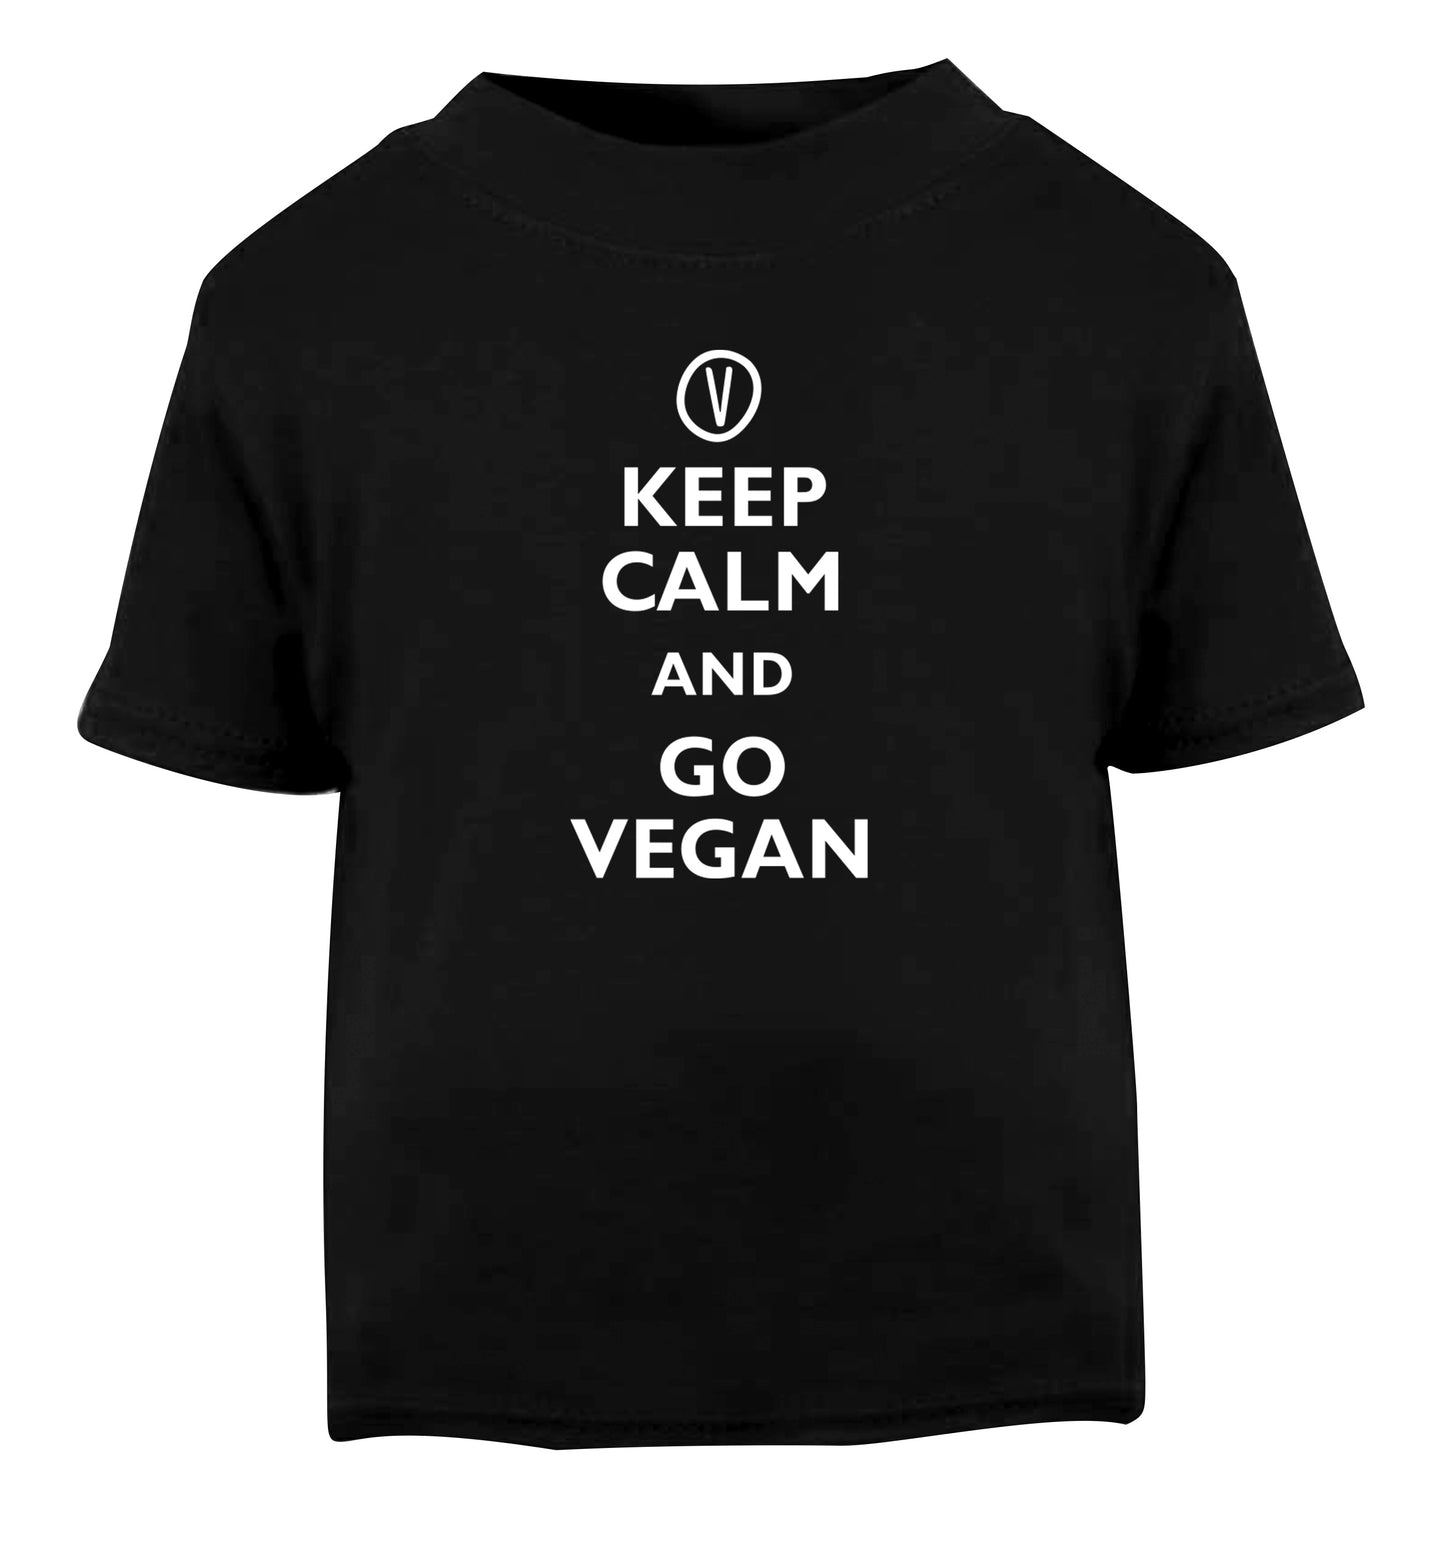 Keep calm and go vegan Black Baby Toddler Tshirt 2 years